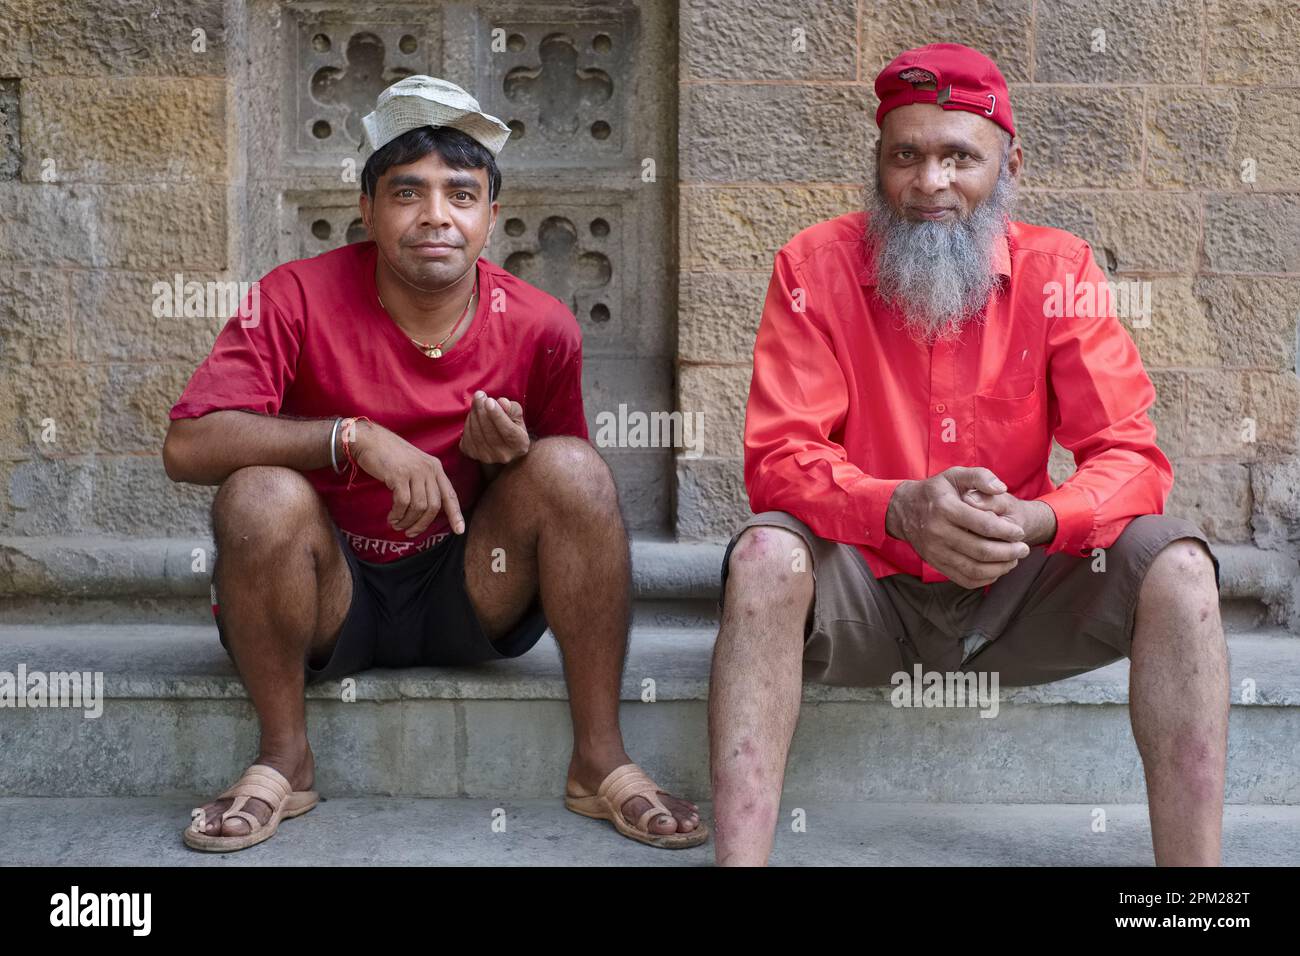 Two friendly porters at Crawford Market Mahatma Jyotiba Phule Market), Mumbai, India, sitting resting; left: a Hindu man, right: a bearded Muslim man Stock Photo